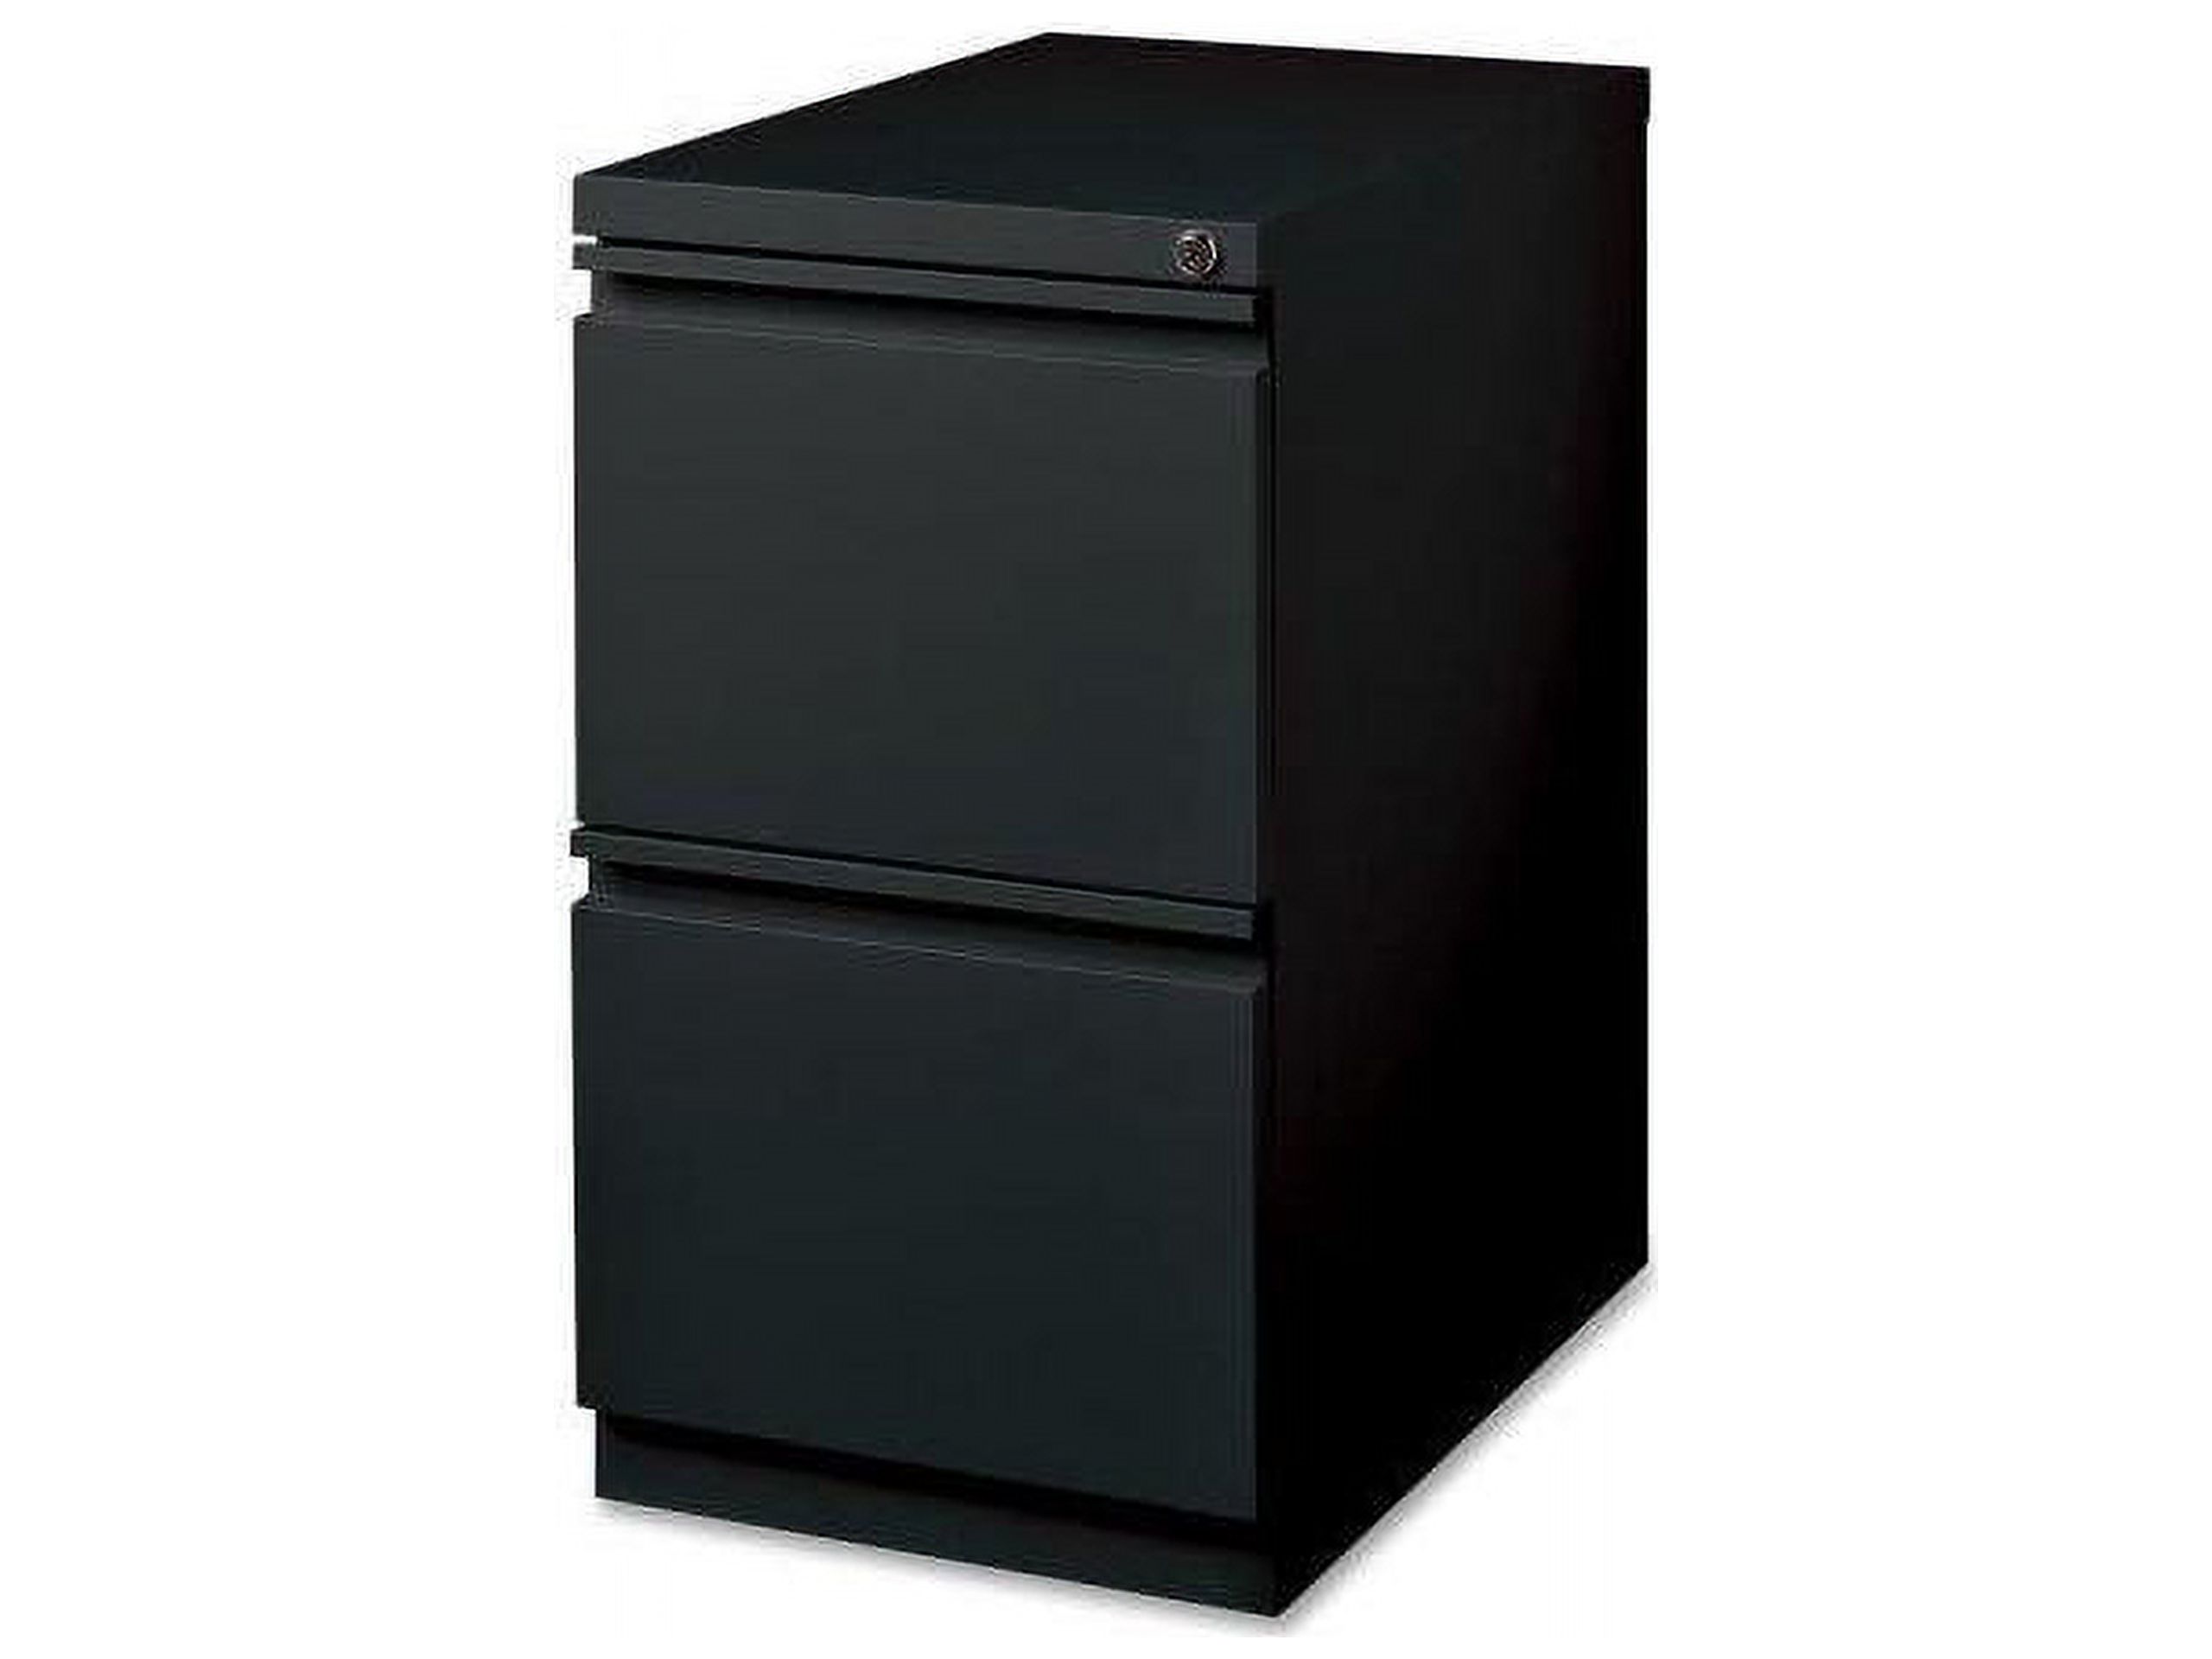 2 Drawers Vertical Steel Lockable Filing Cabinet, Black - image 1 of 12